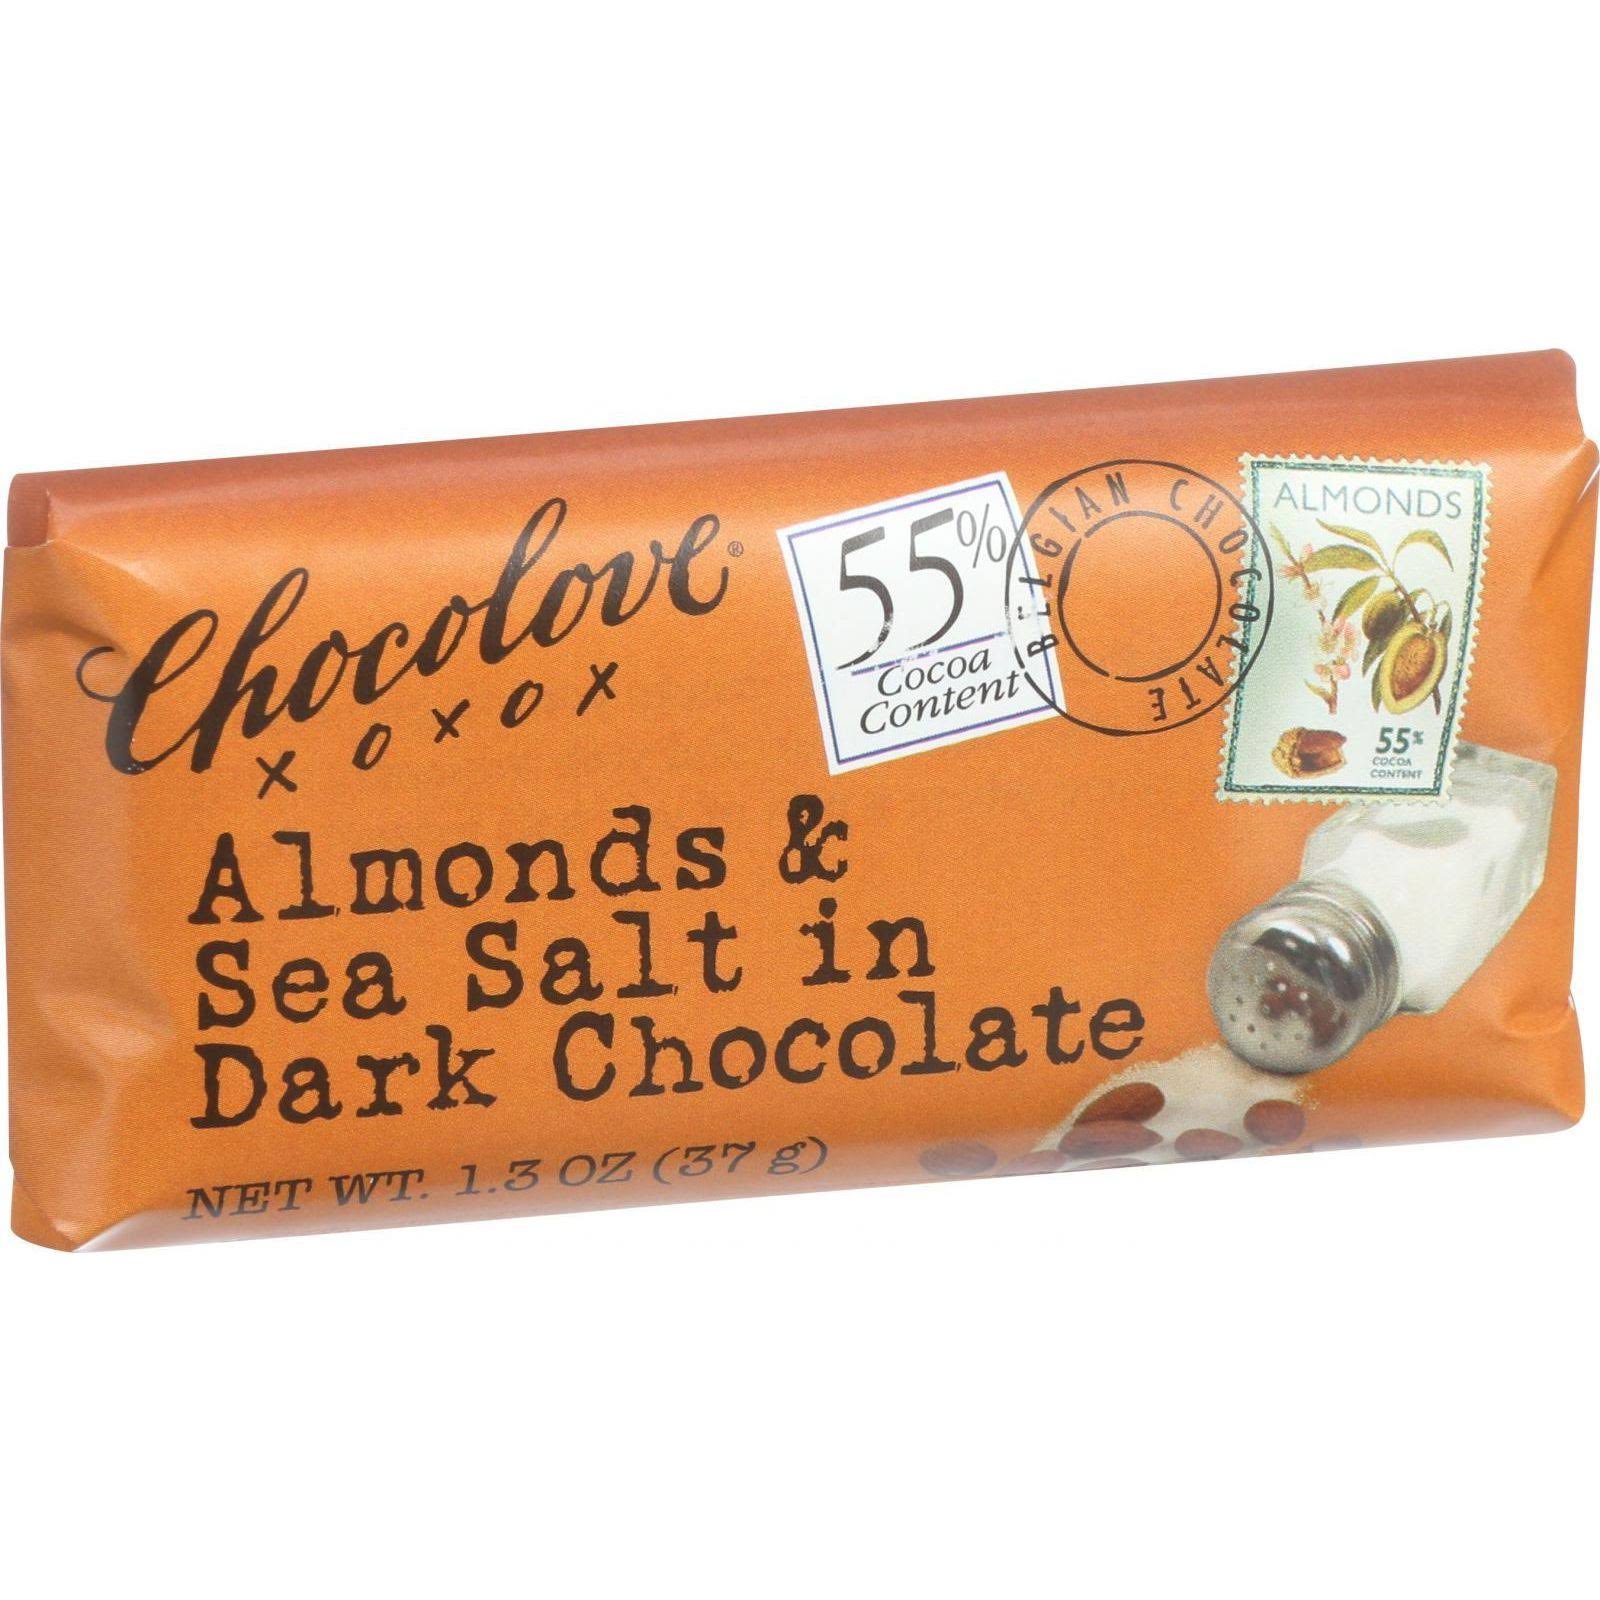 Chocolove Chocolate Bar - Almonds and Sea Salt in Dark Chocolate, 1.3oz